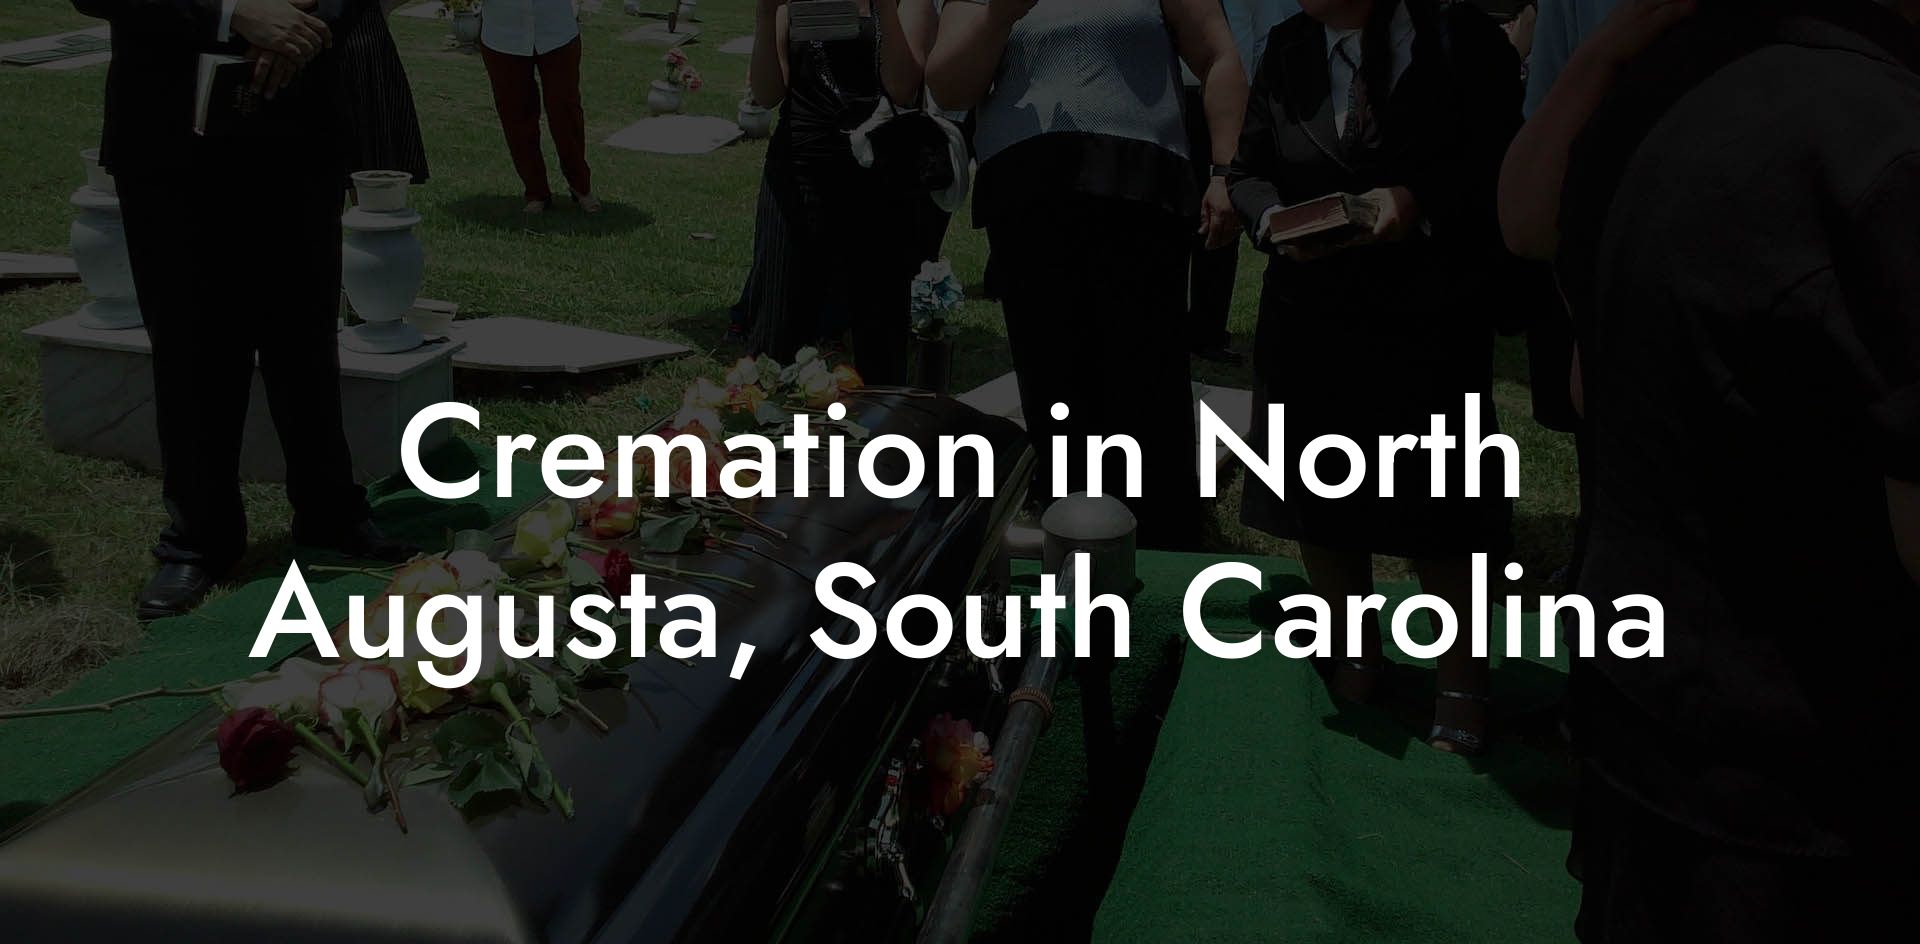 Cremation in North Augusta, South Carolina